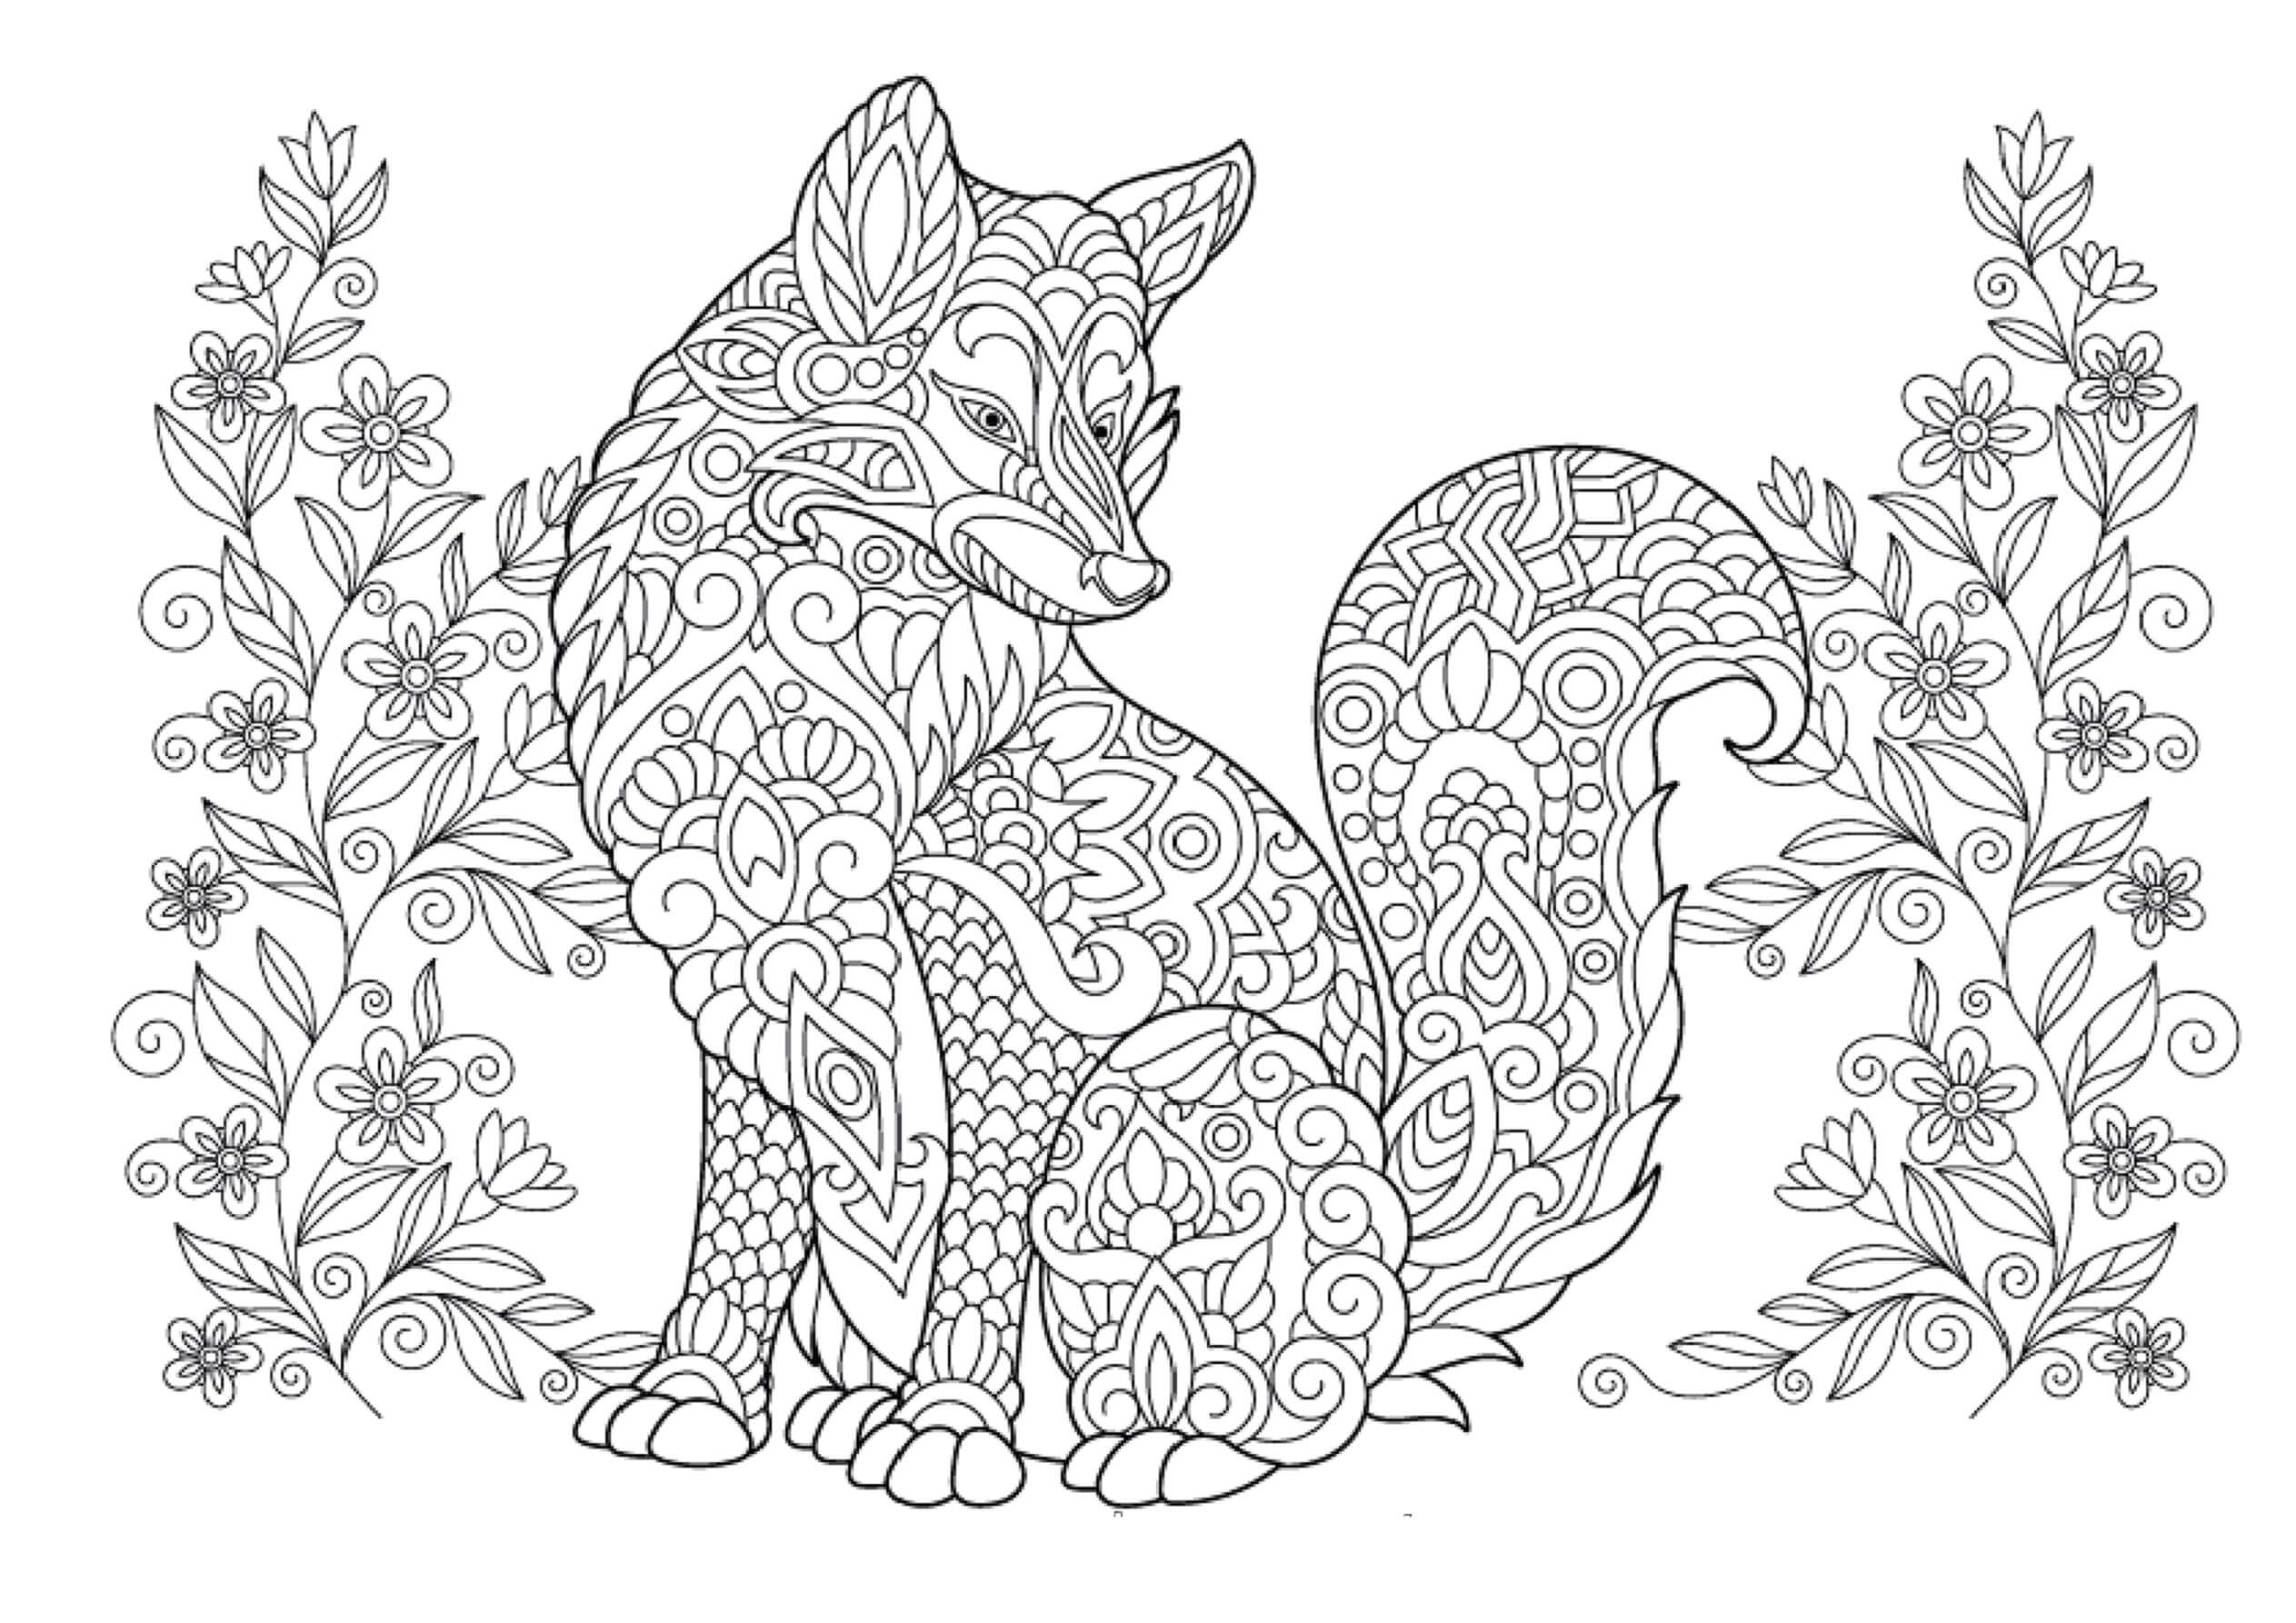 Mandala Fox Coloring Page - Sheet 3 Mandalas